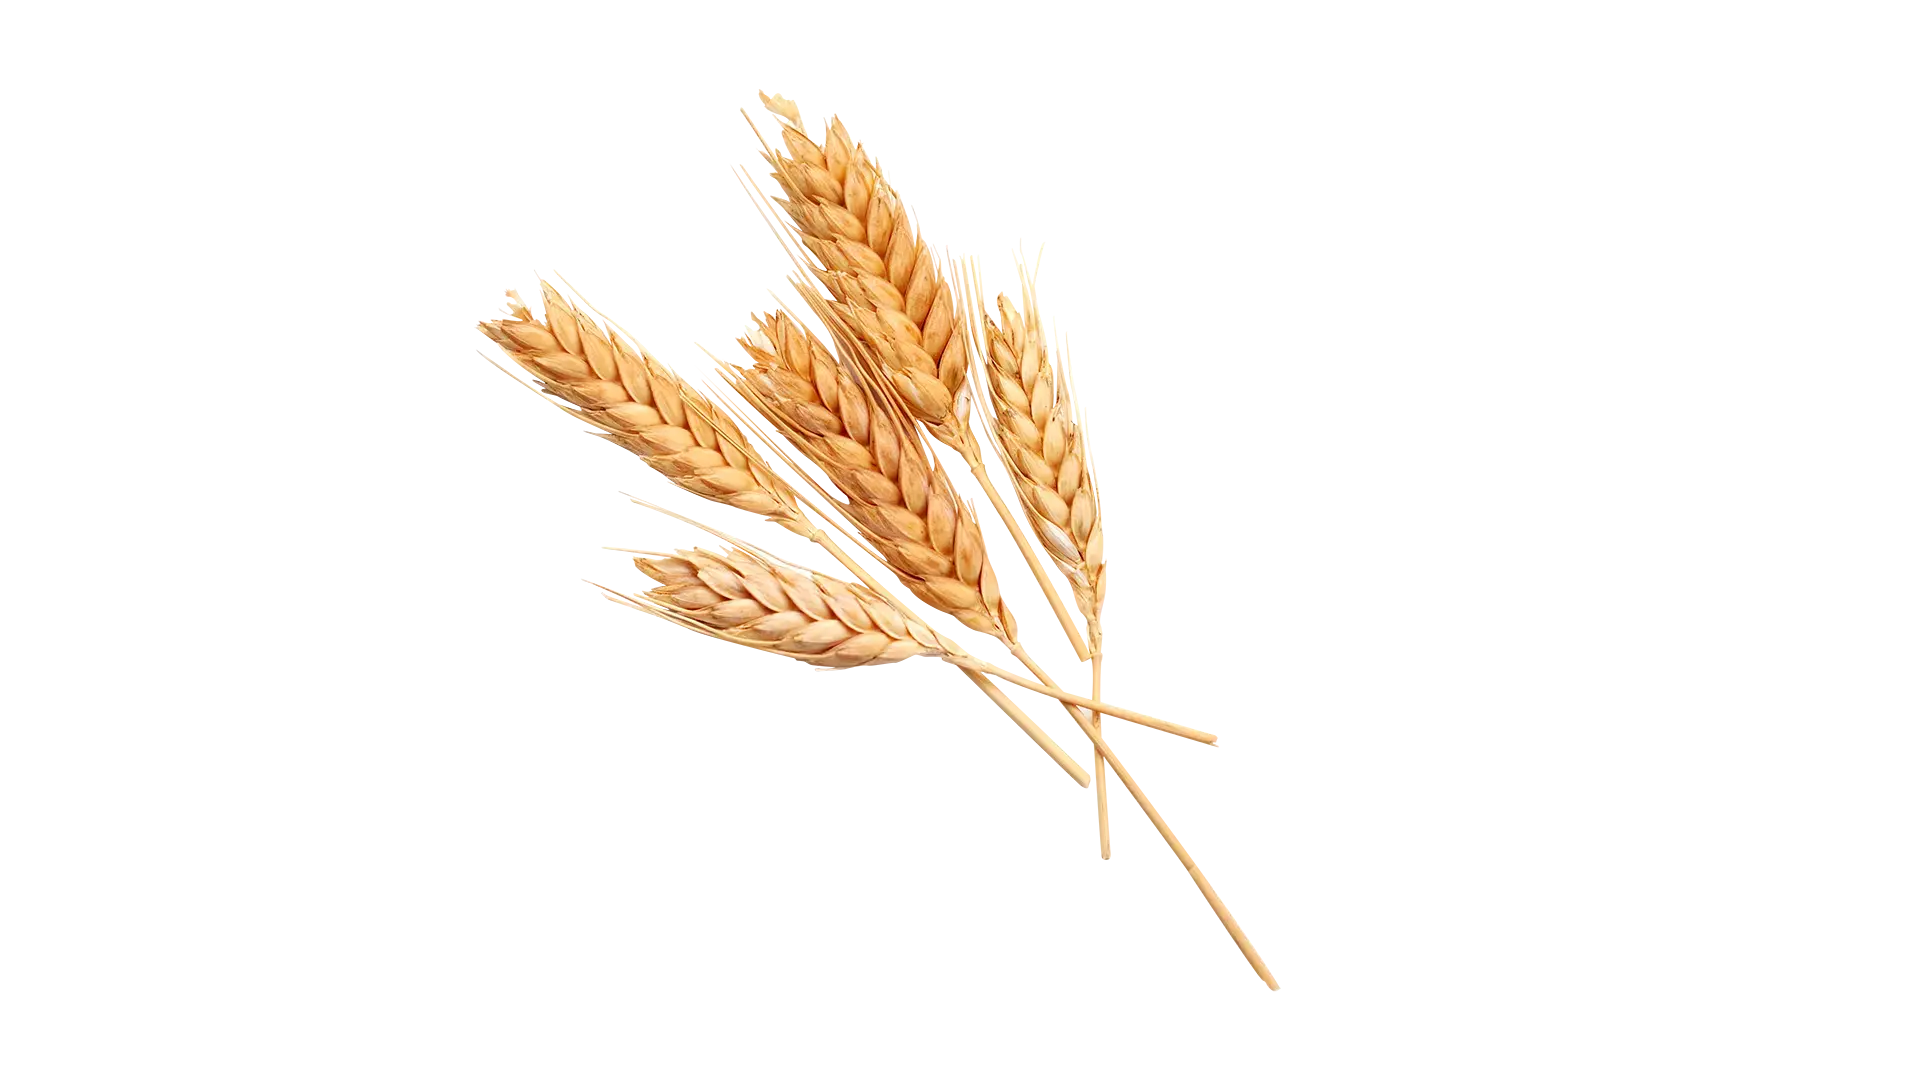 Heads of wheat grain